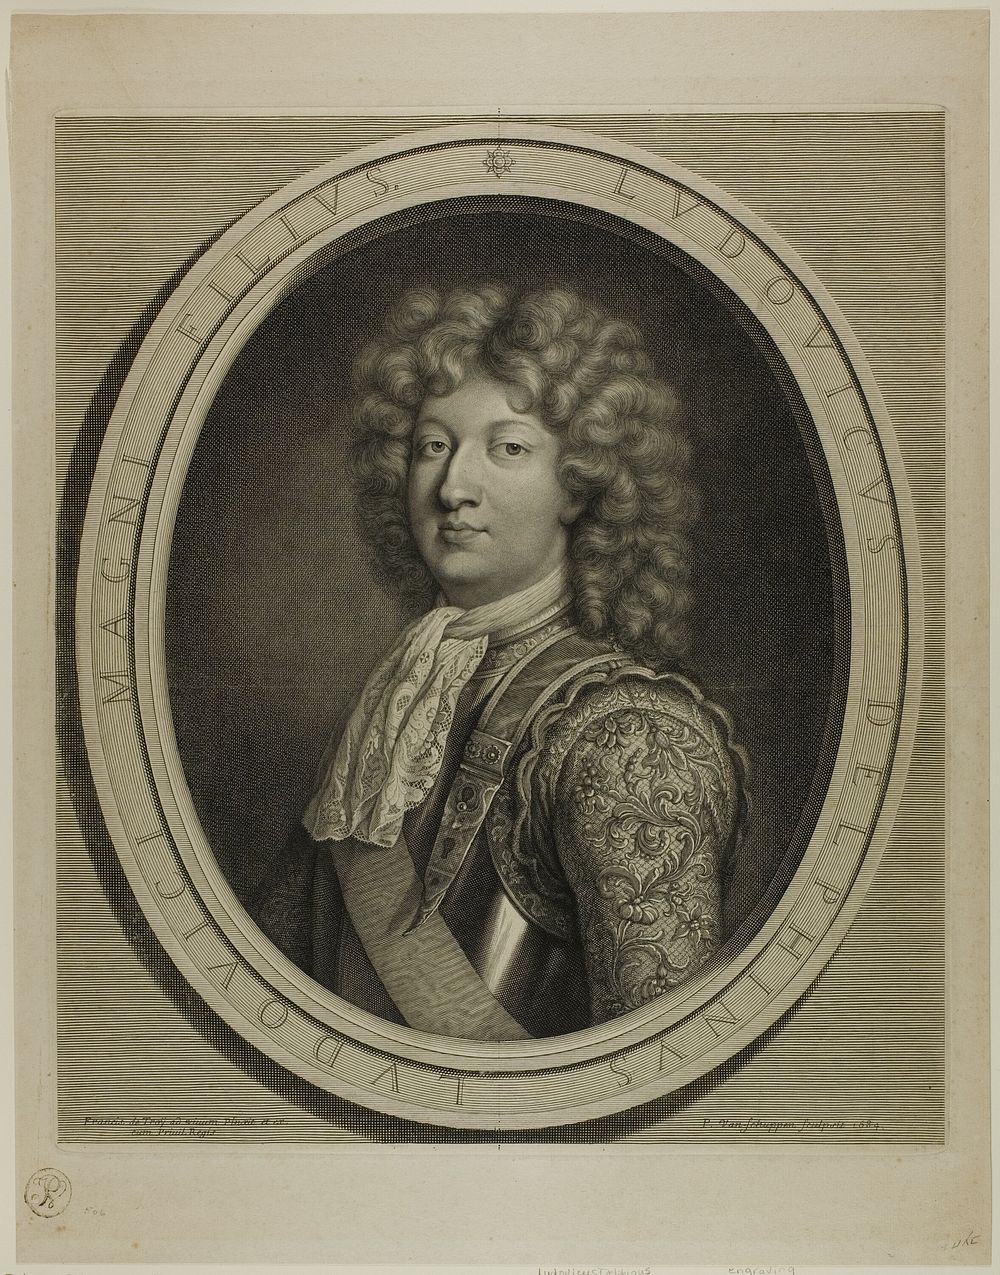 Ludovicus Delphinus by Pierre Louis van Schuppen